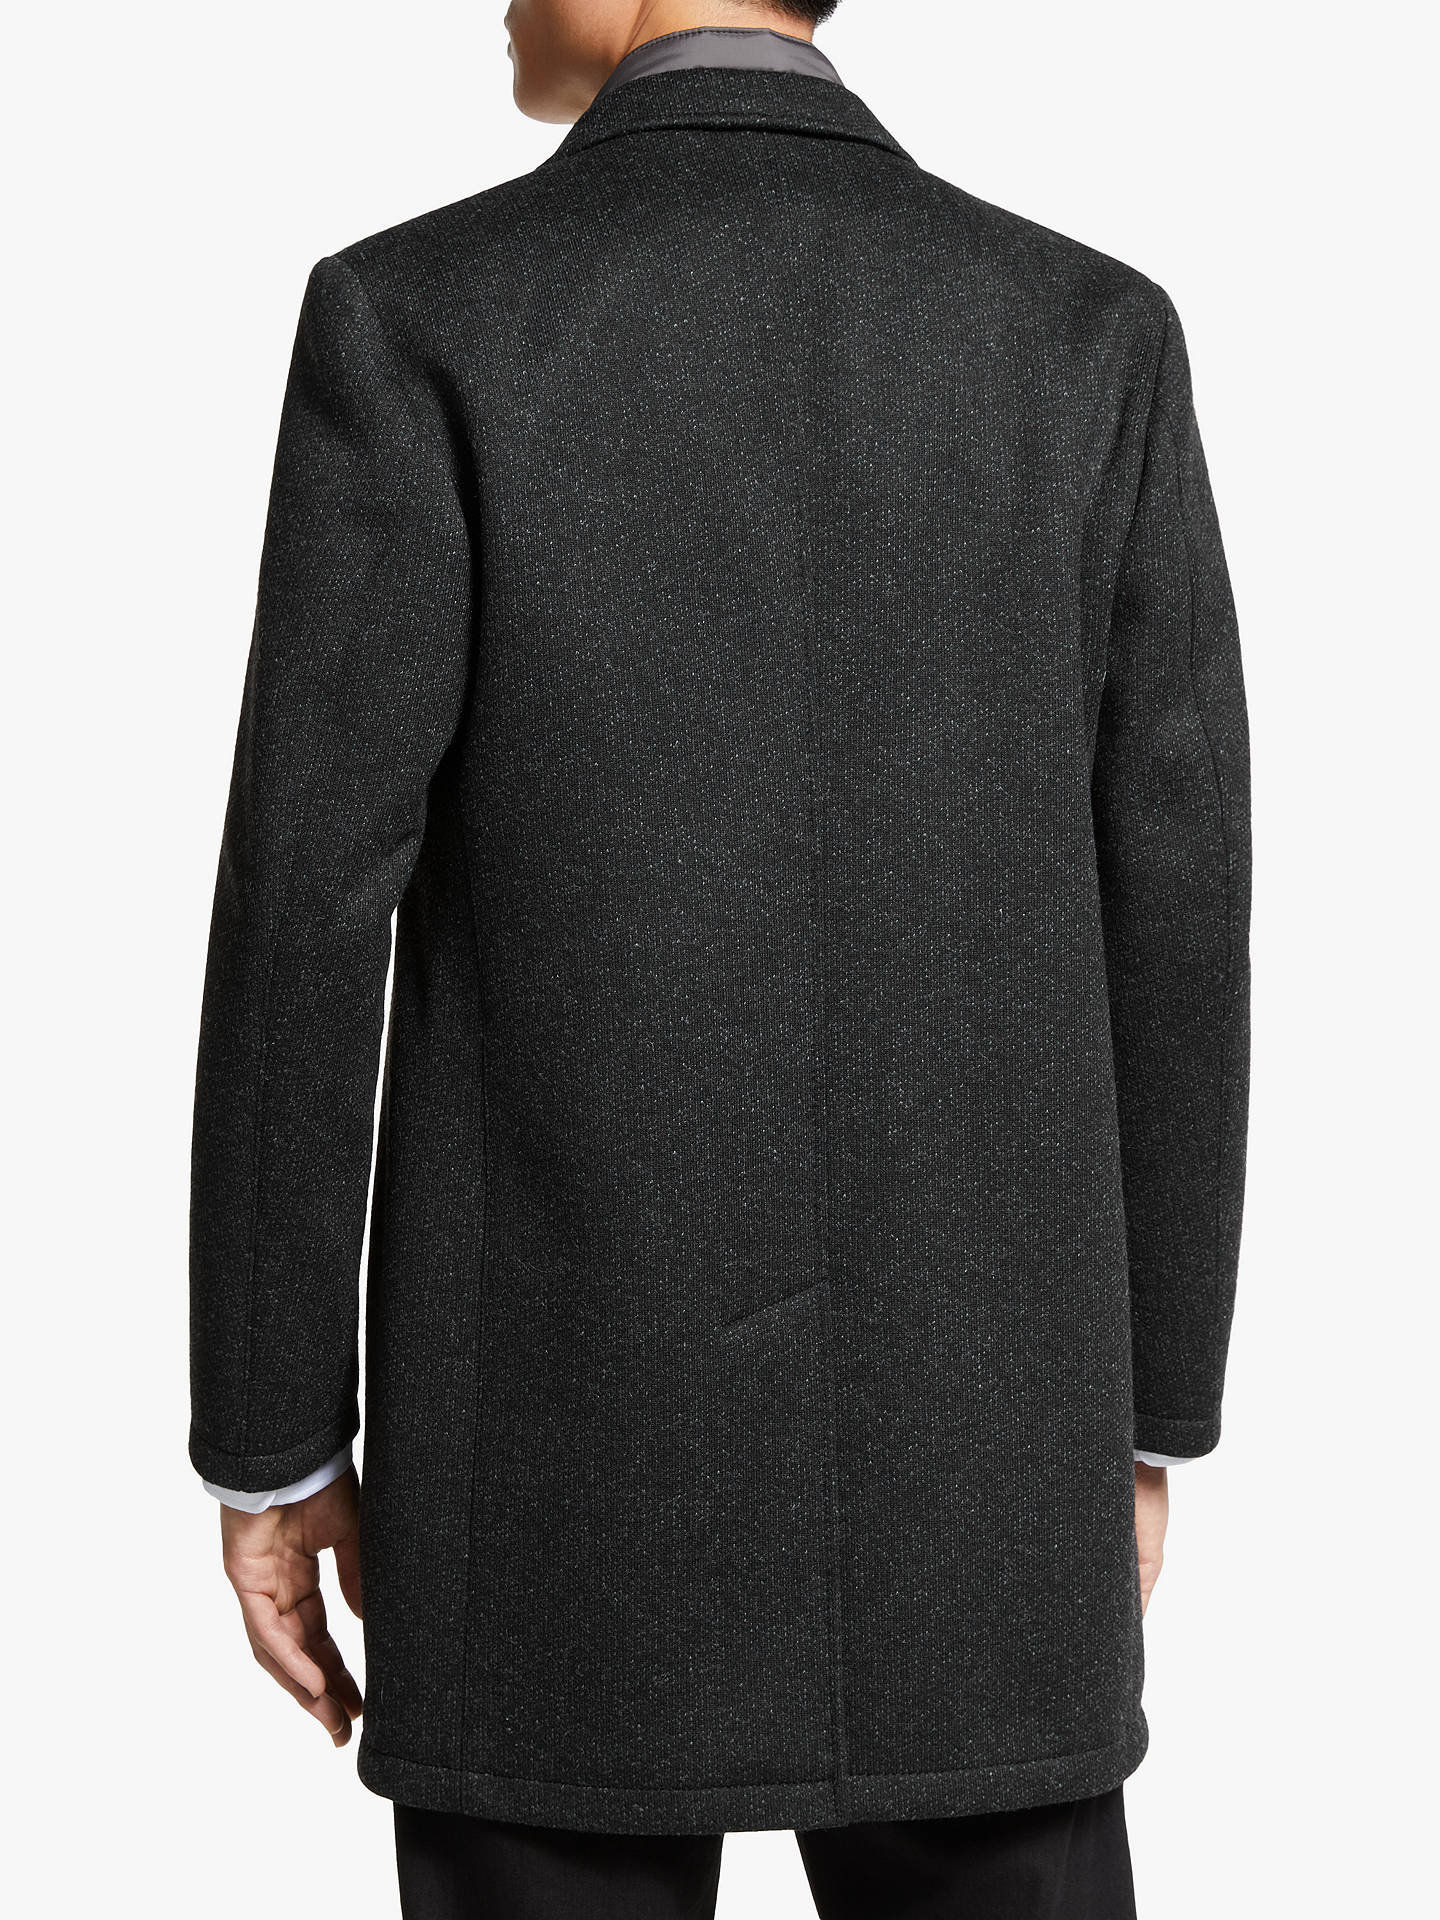 Bugatti Flexcity Wool Blend Overcoat, Grey at John Lewis & Partners